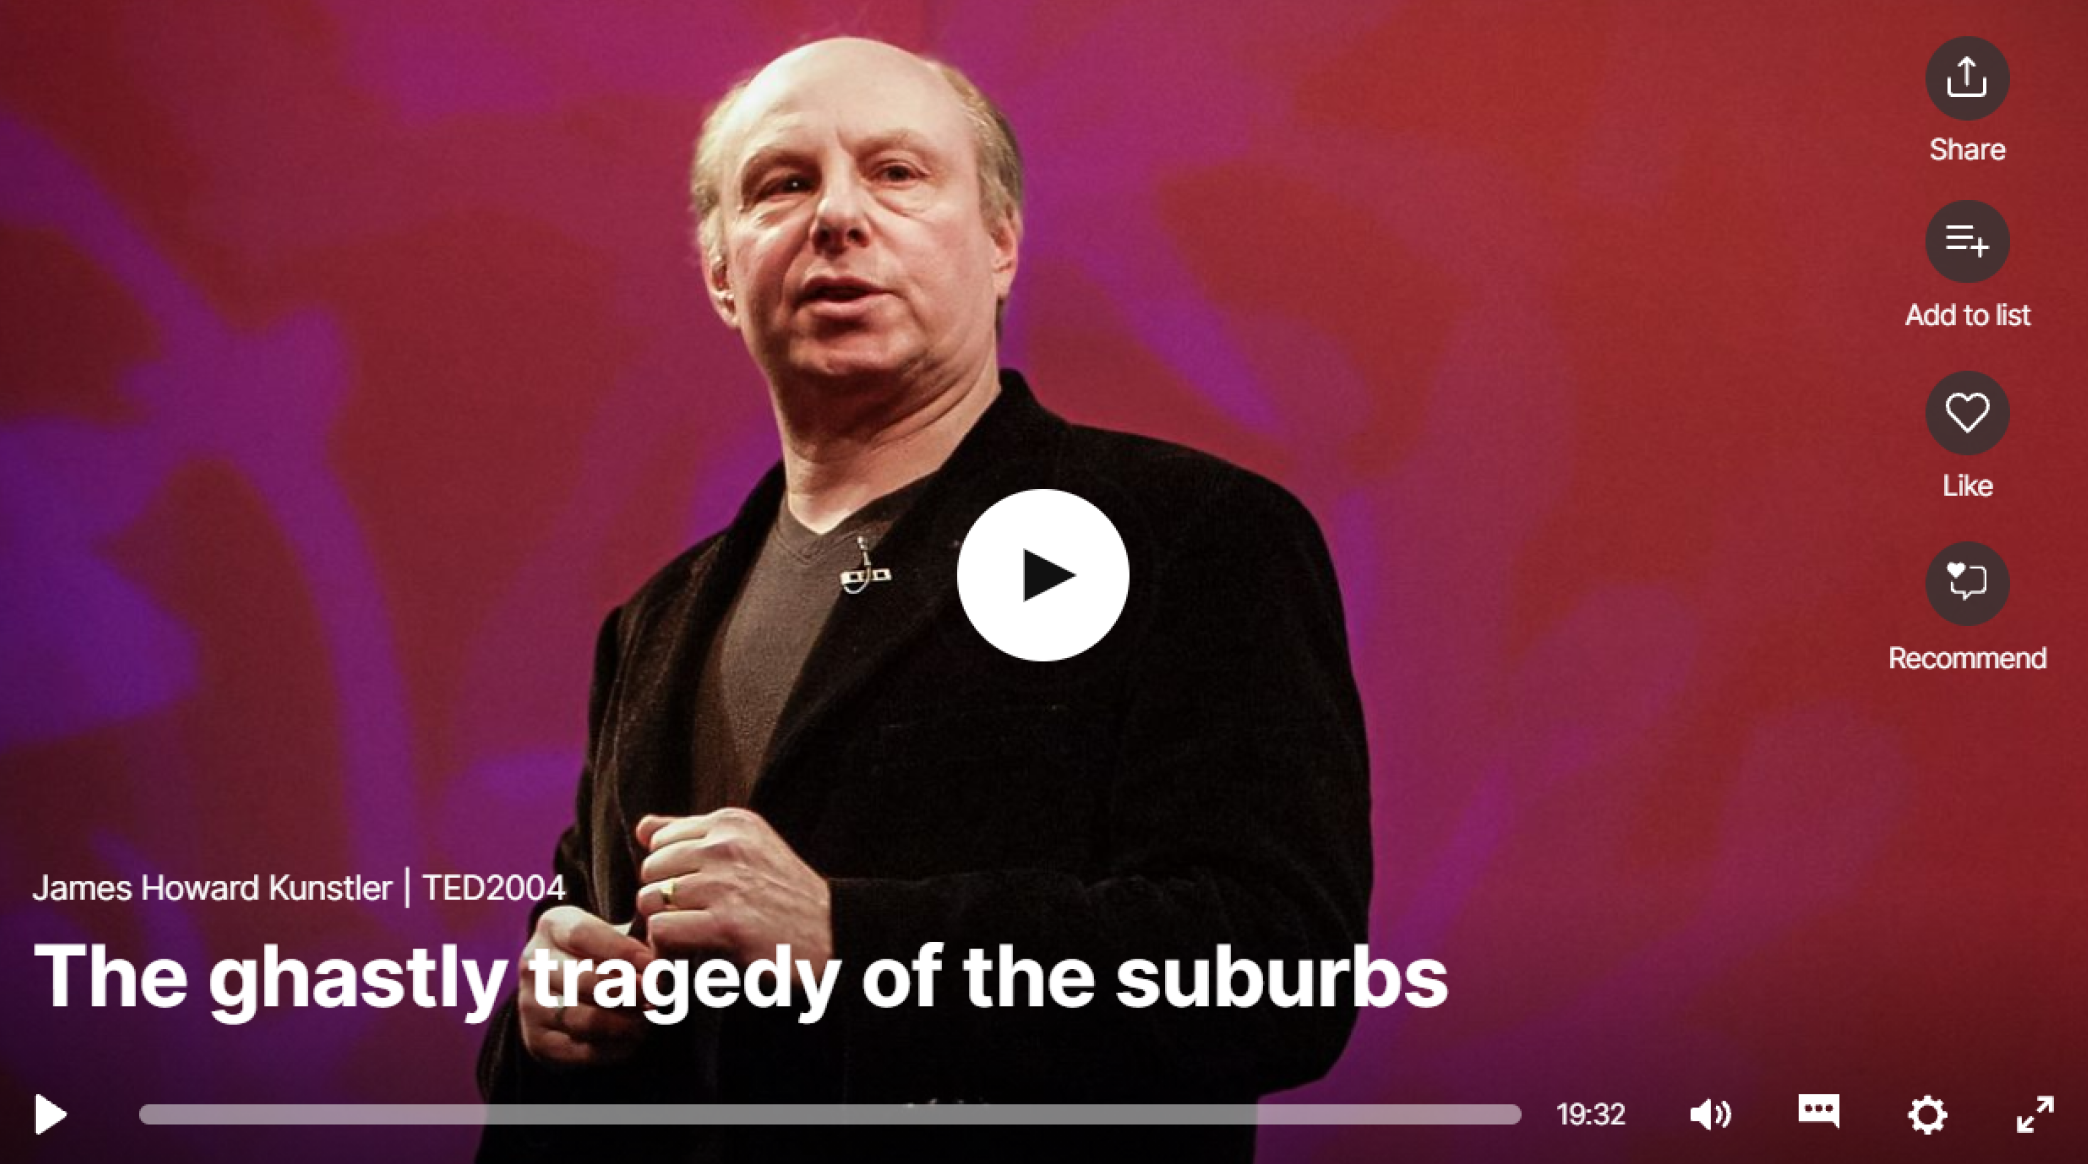 Cover shot of James Howard Kunstler's TED talk